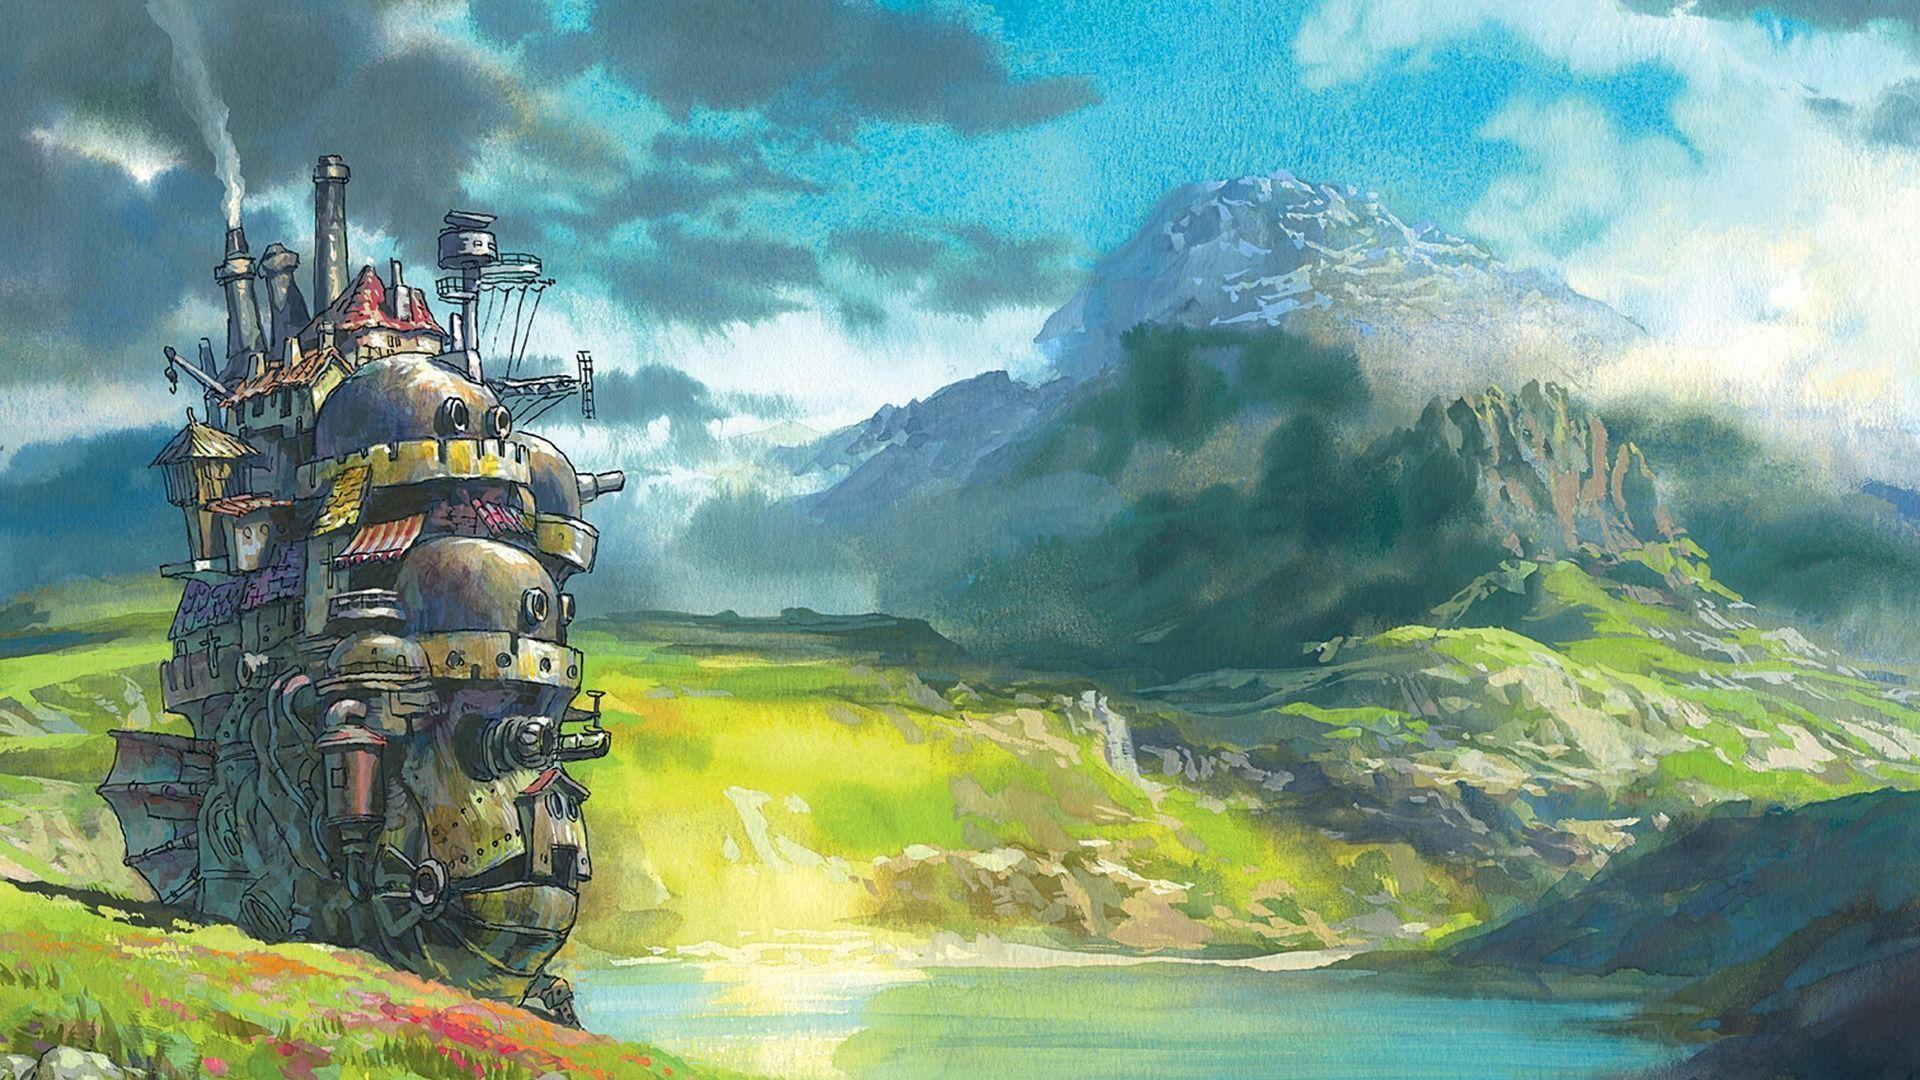 Howls moving castle wallpaper, Studio ghibli background, Ghibli art